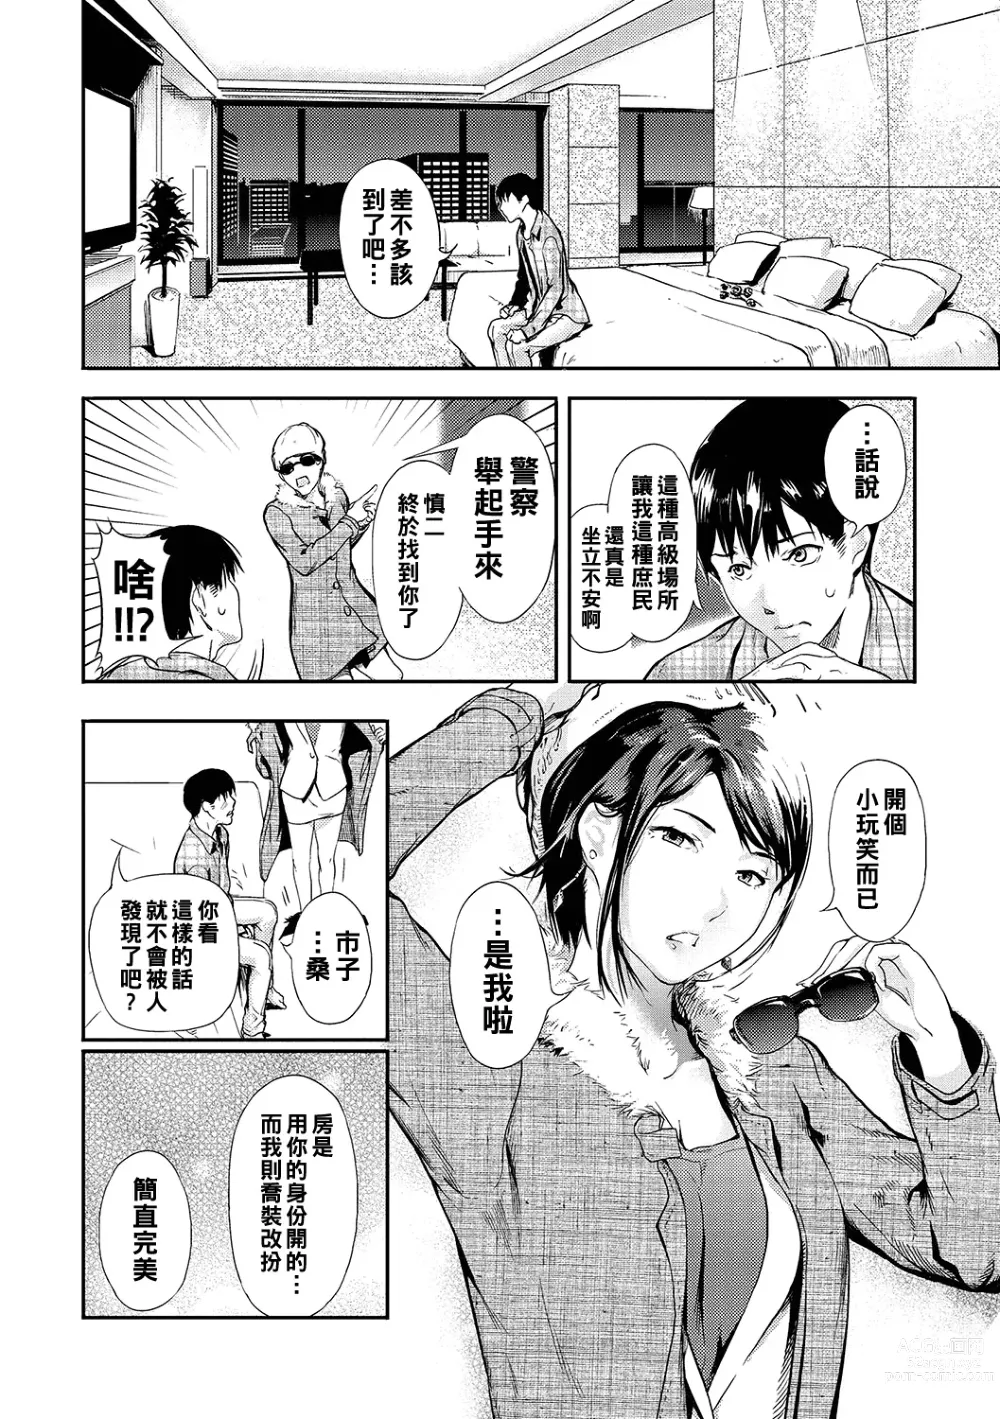 Page 2 of manga FRIDAY NIGHT FEVER